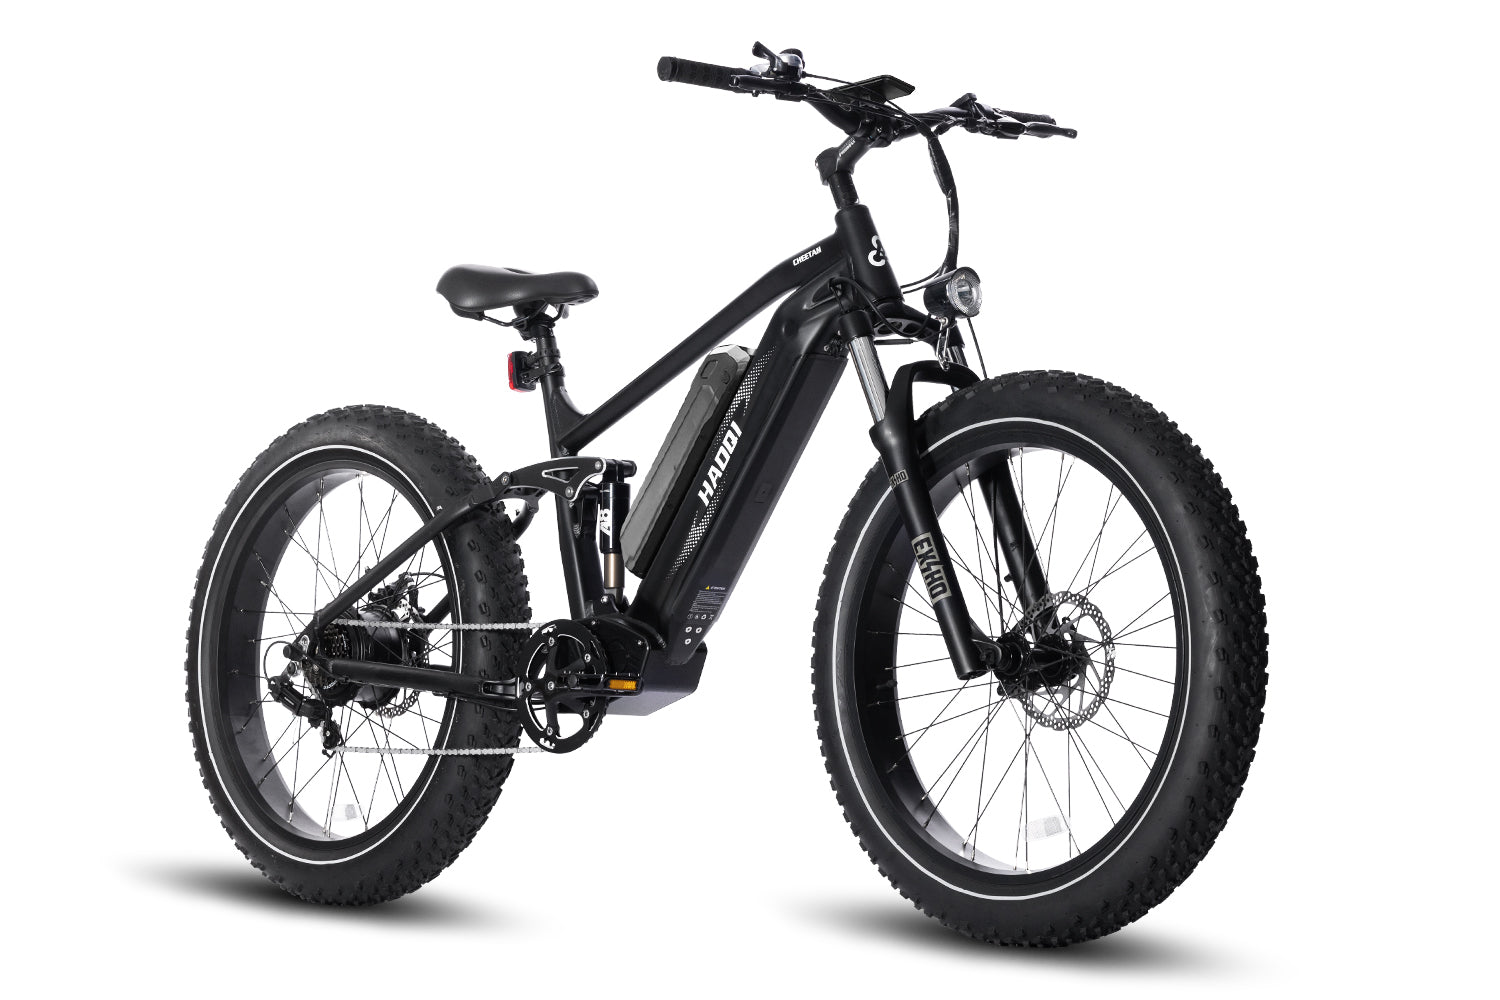 HAOQI Black Cheetah Full Suspension Electric Bike - Dual Battery Version Available [electric bike] [HAOQI ebike]